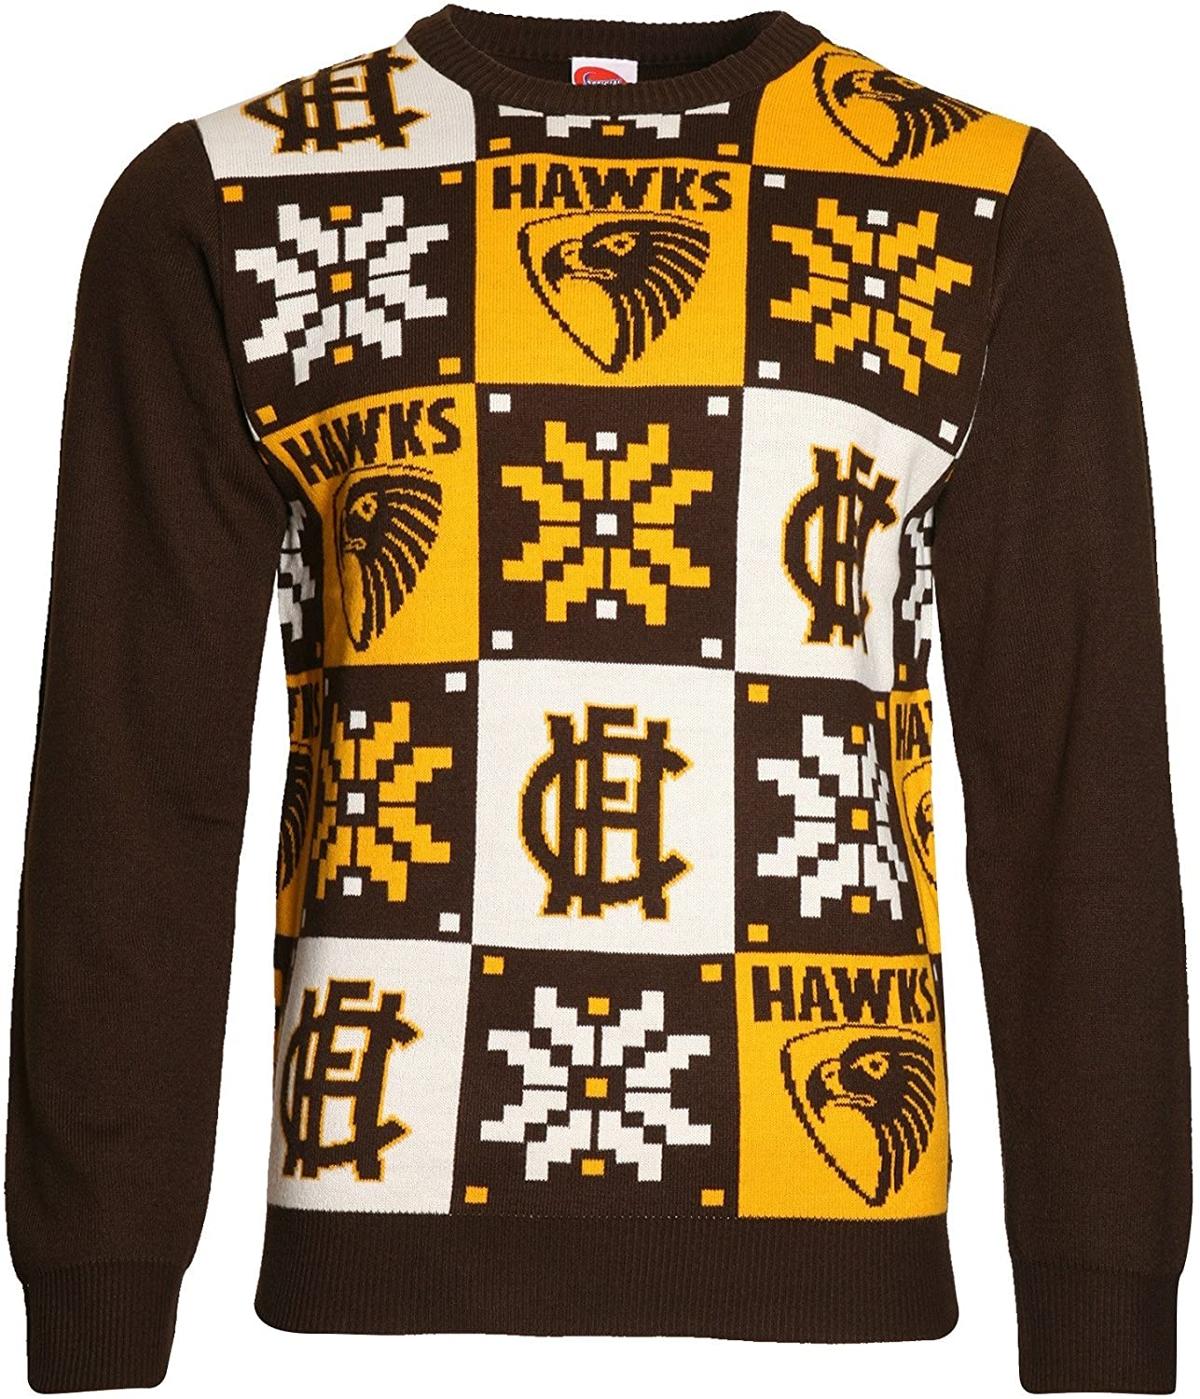 Hawthorn Hawks Sweater Best Gift For Fans